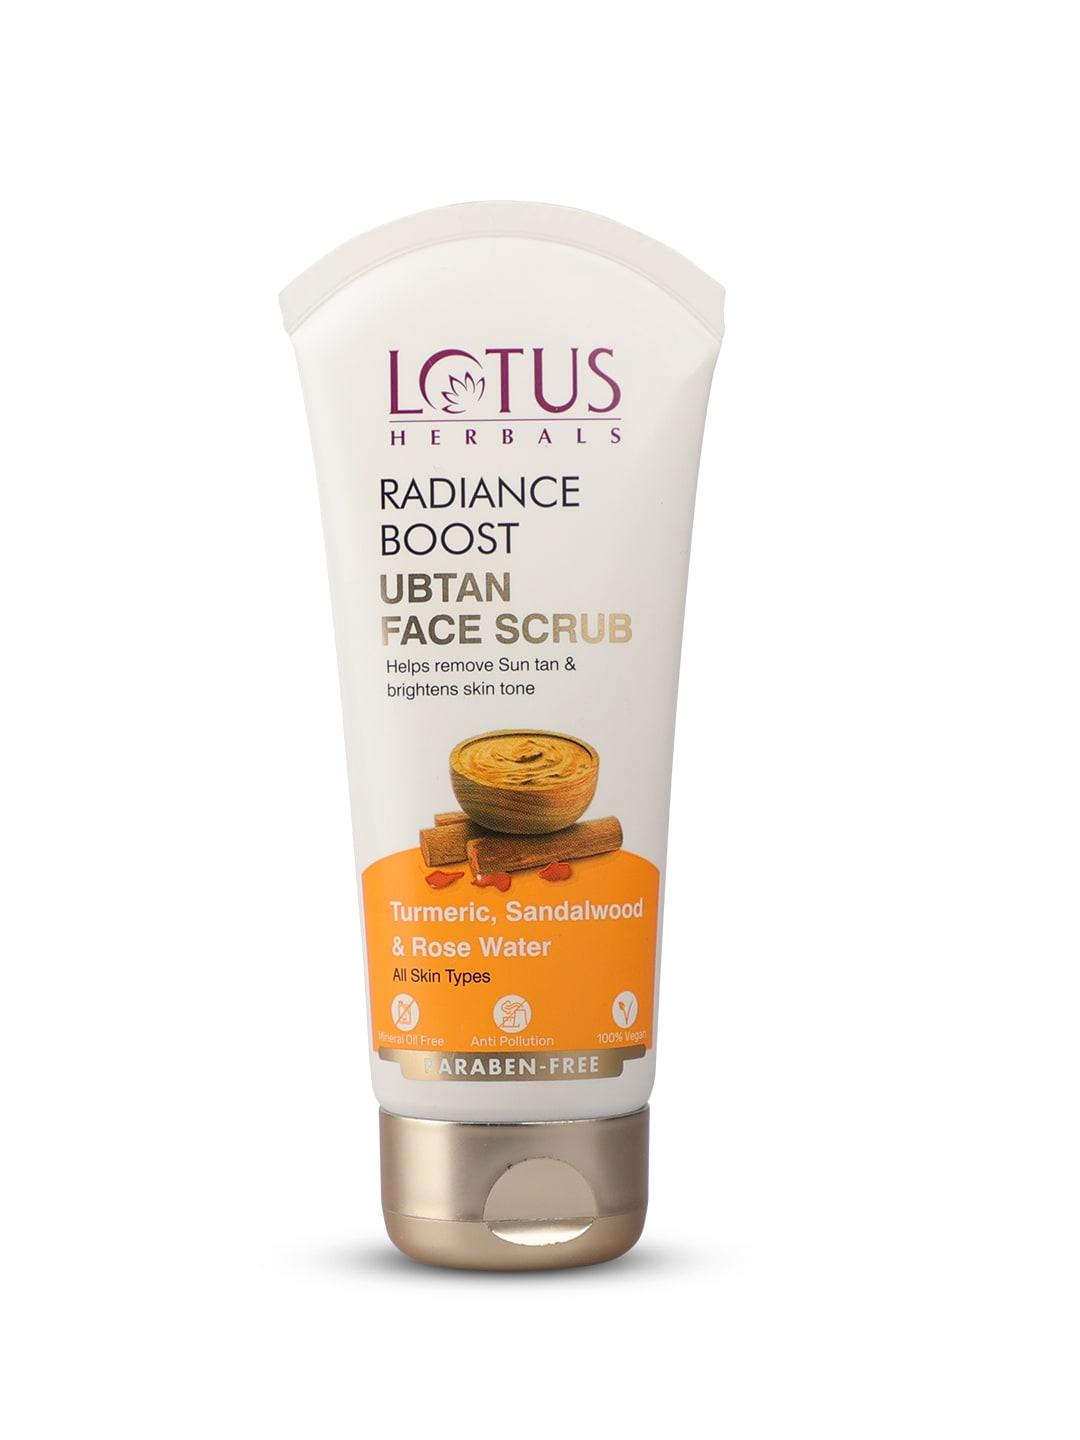 lotus herbals radiance boost ubtan face scrub to remove sun tan with turmeric - 100 g